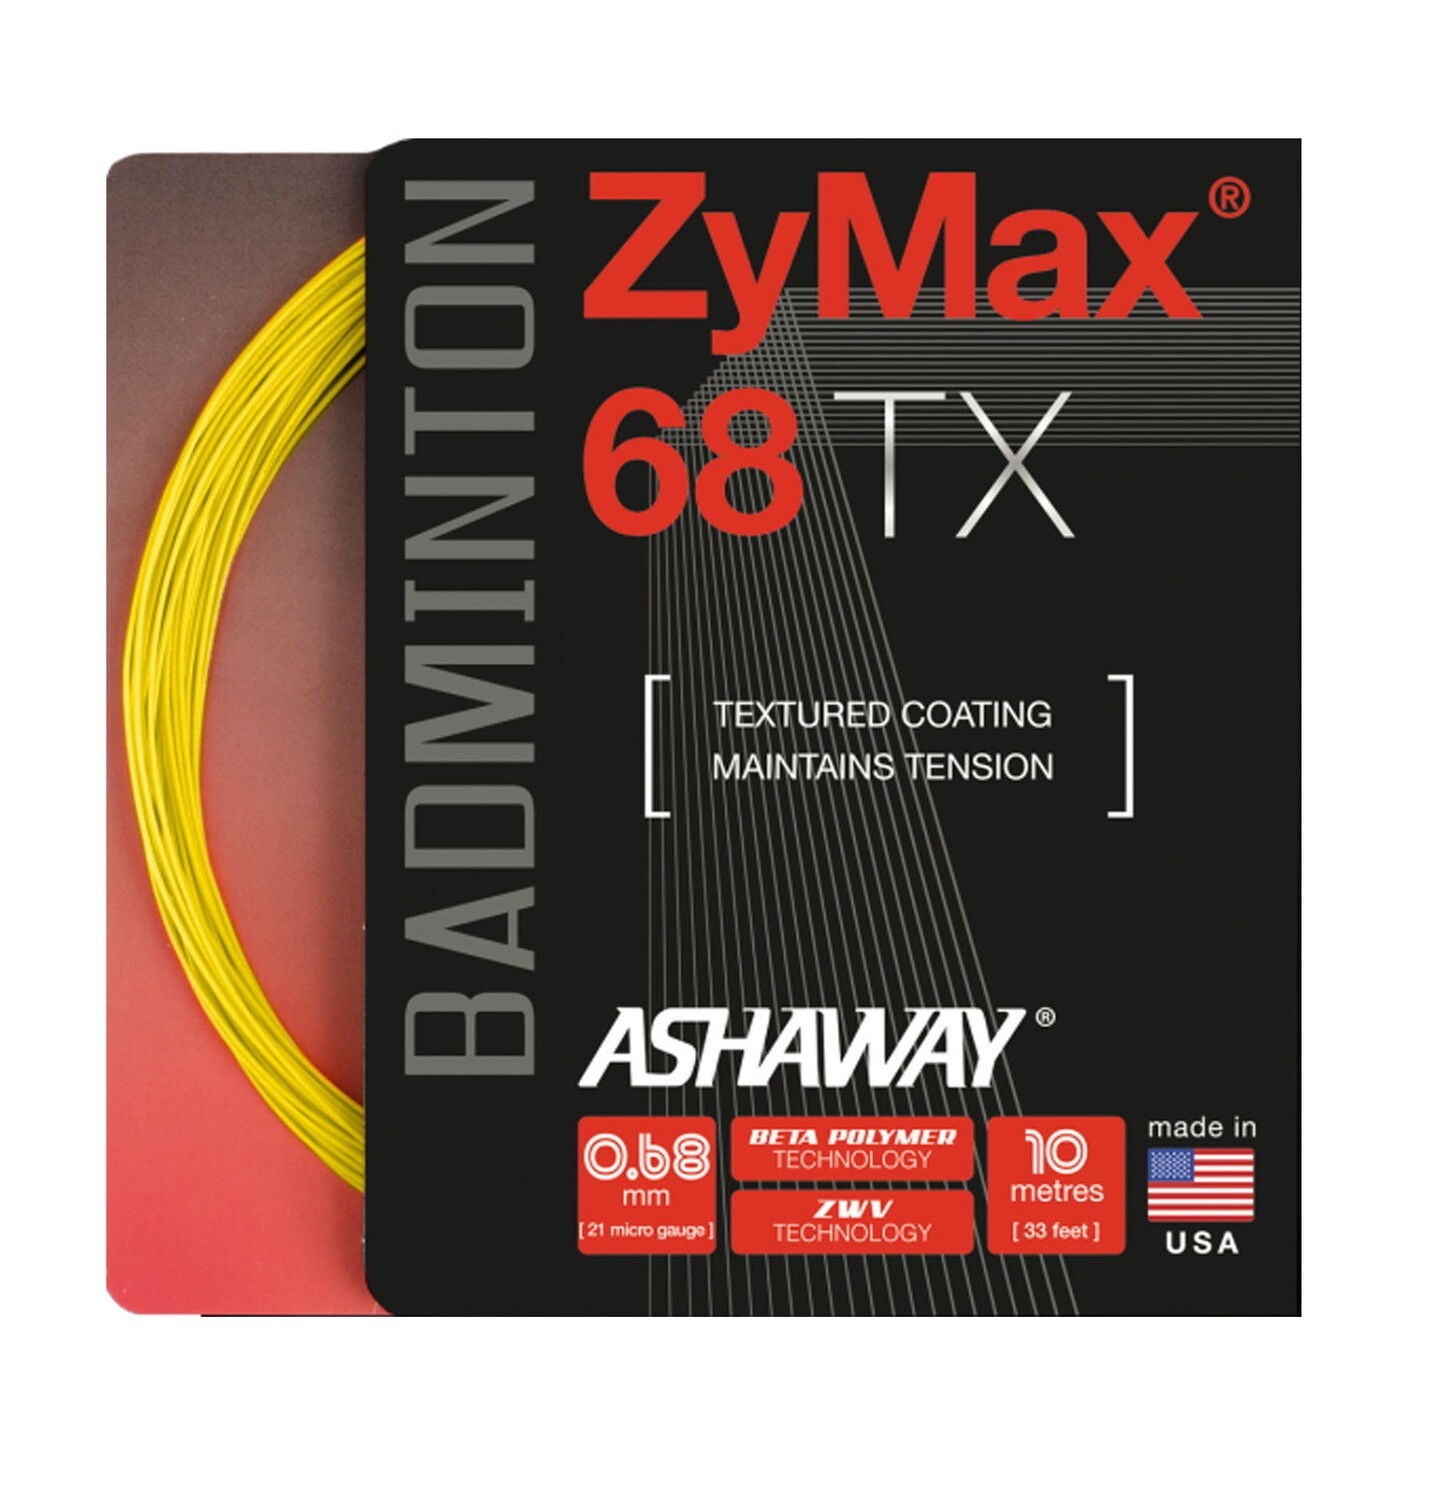 Ashaway Zymax 68 TX Badminton String Set - Yellow